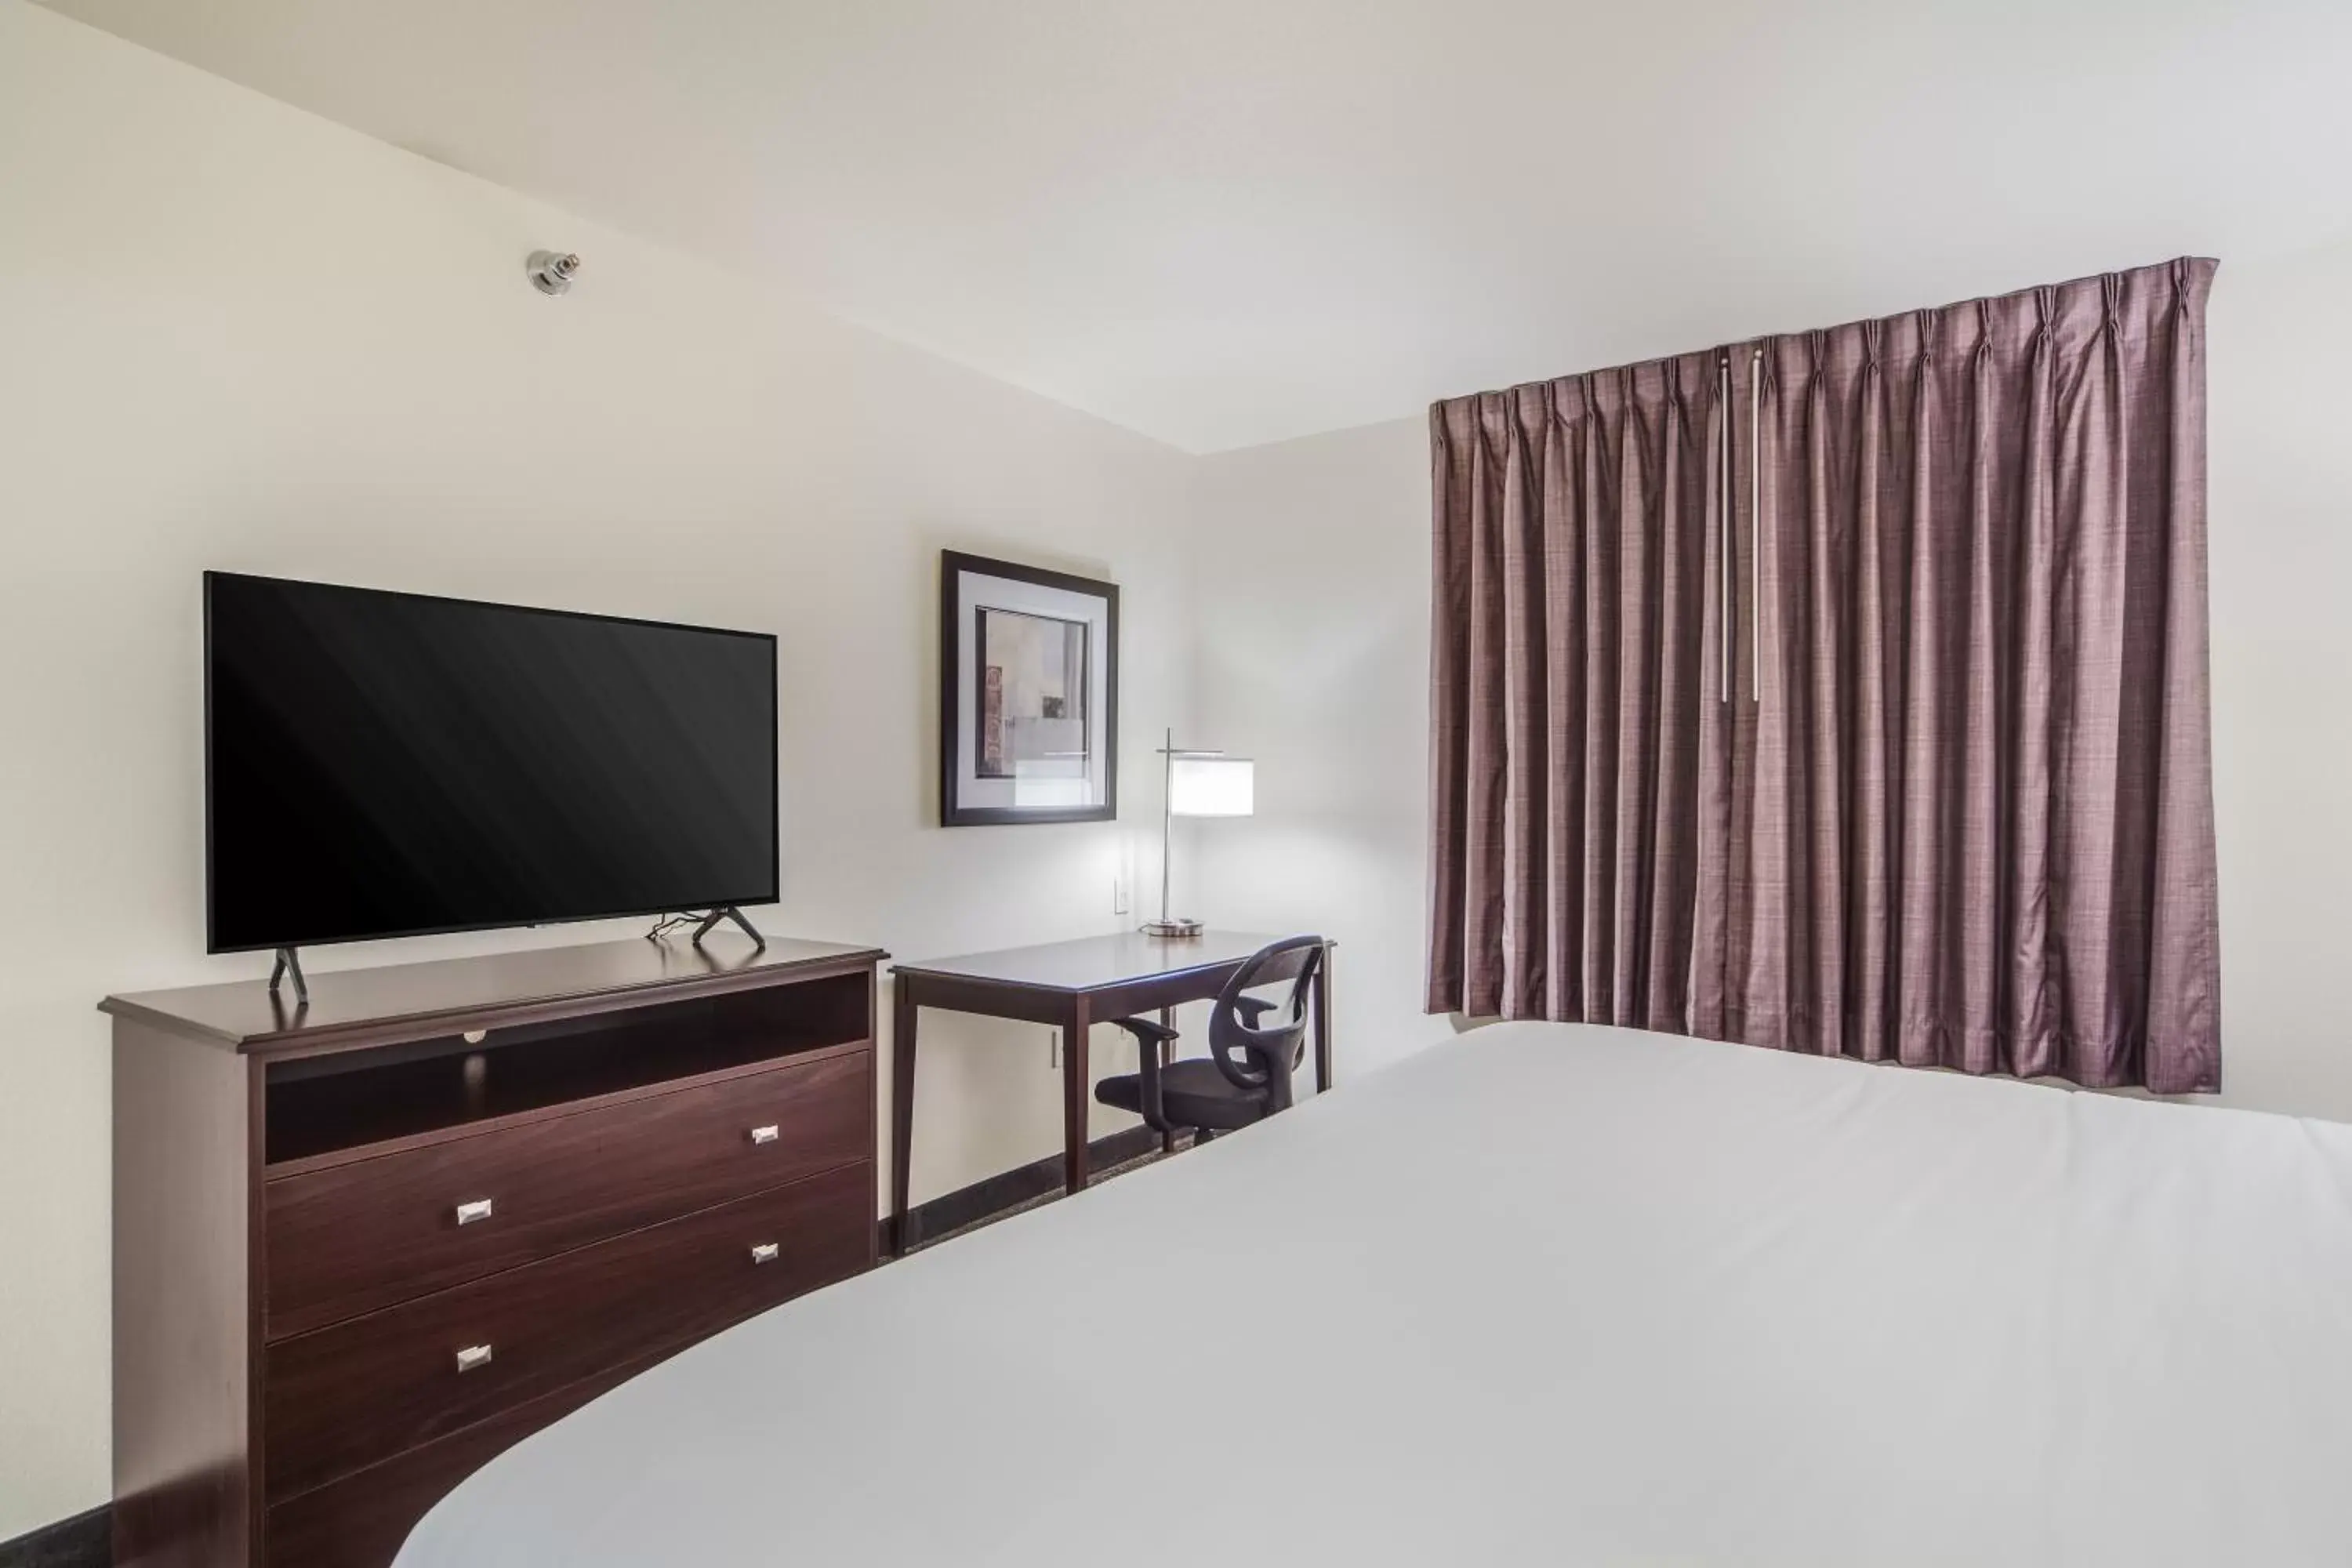 Bed in Cobblestone Hotel & Suites - Cozad